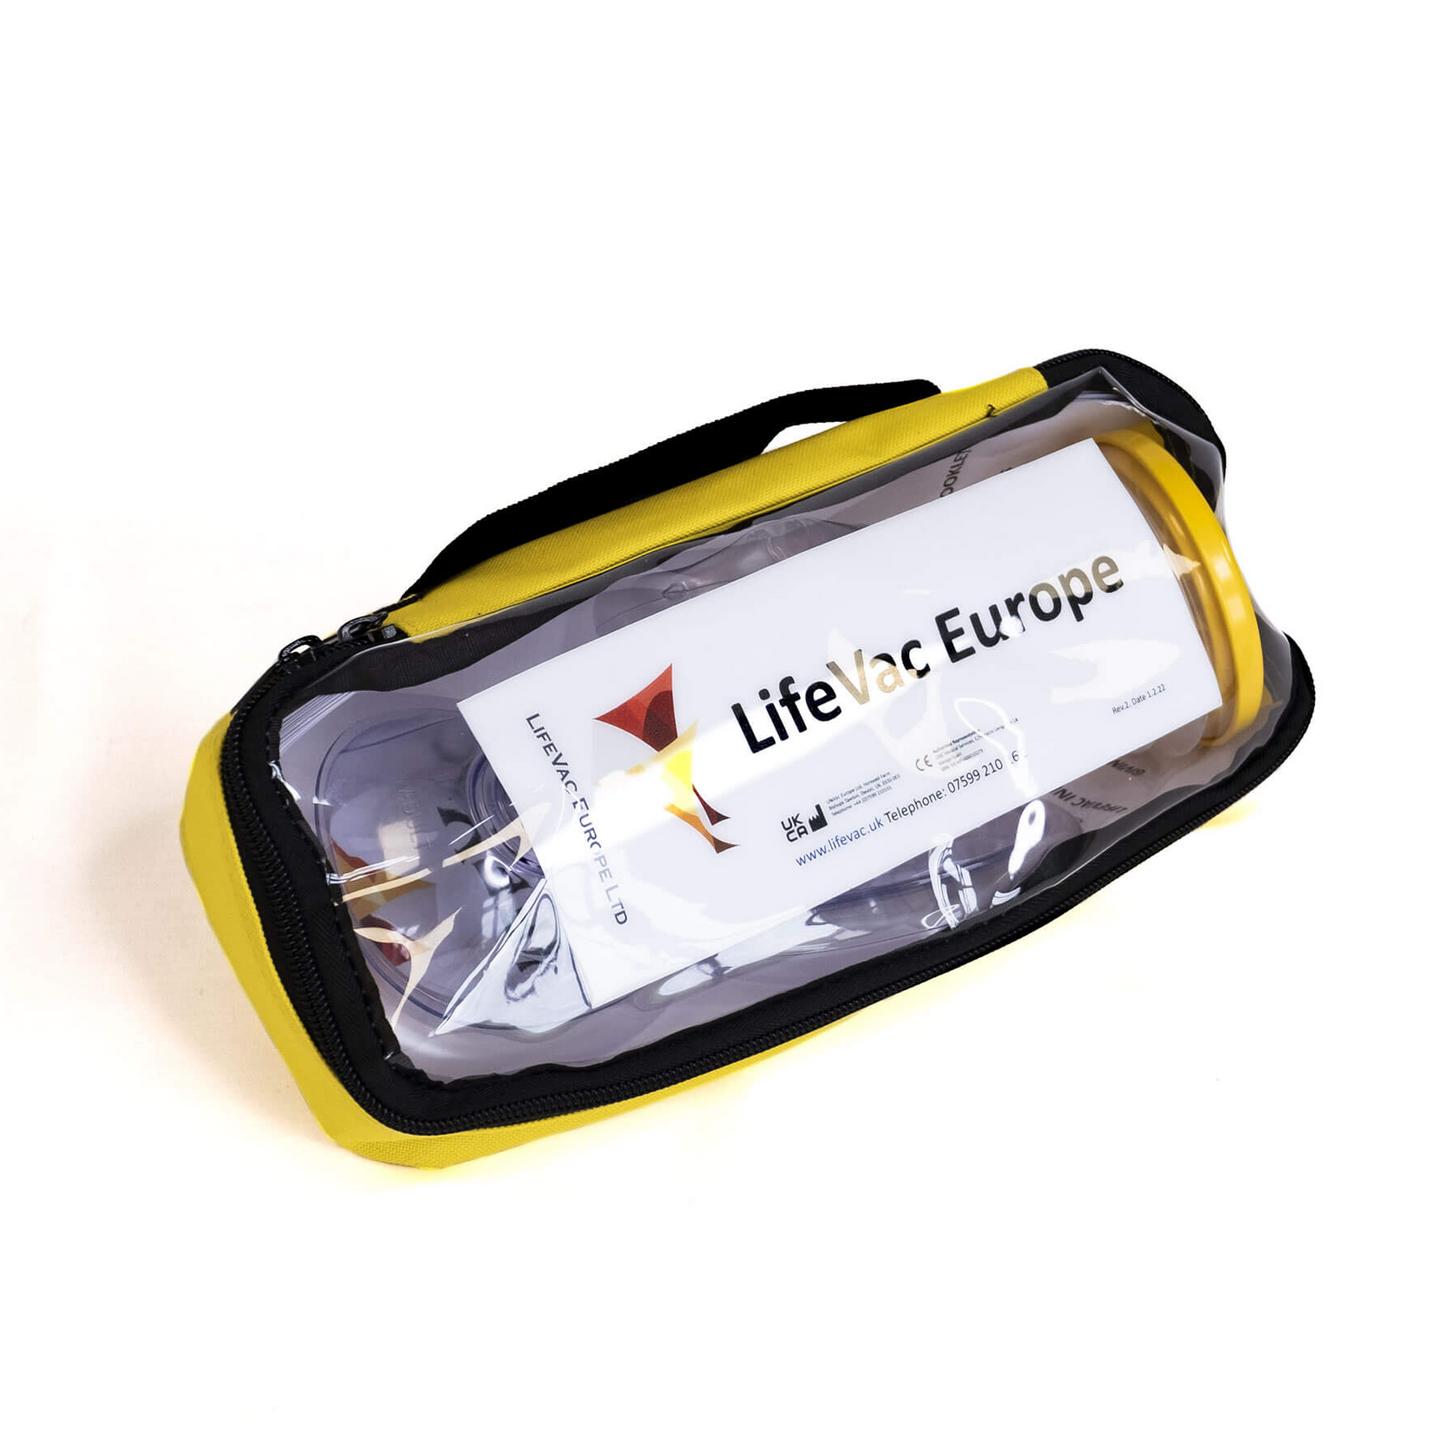 LifeVac Anti-choking Travel Kit